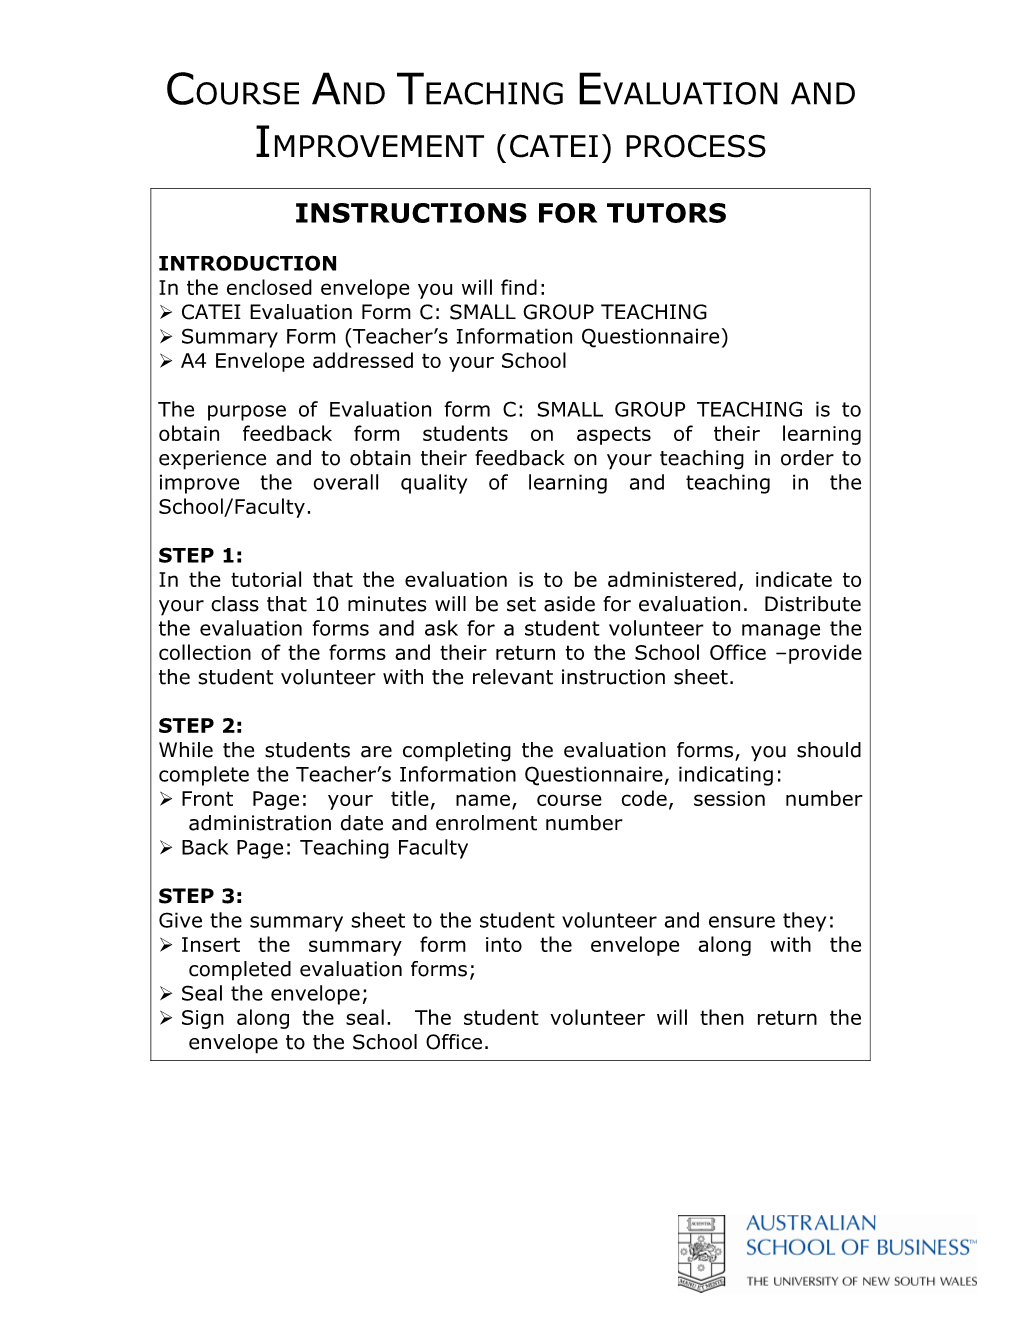 Instructions for Tutors